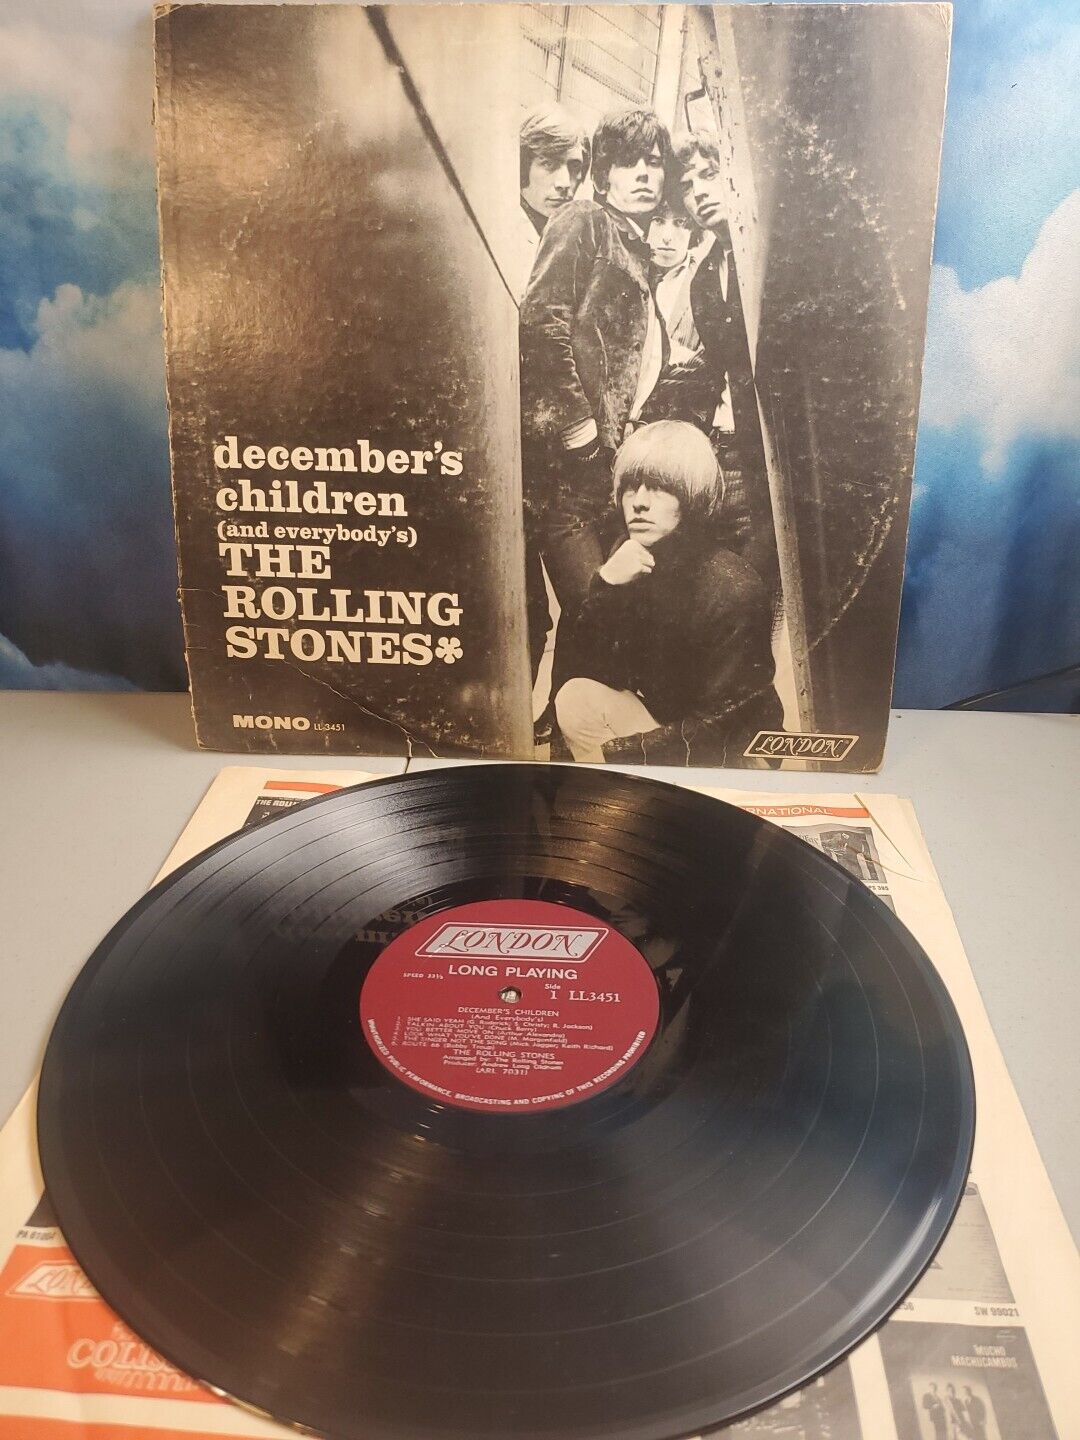 Rolling Stones - December's Children Vinyl LP London LL 3451 1st Press Mono